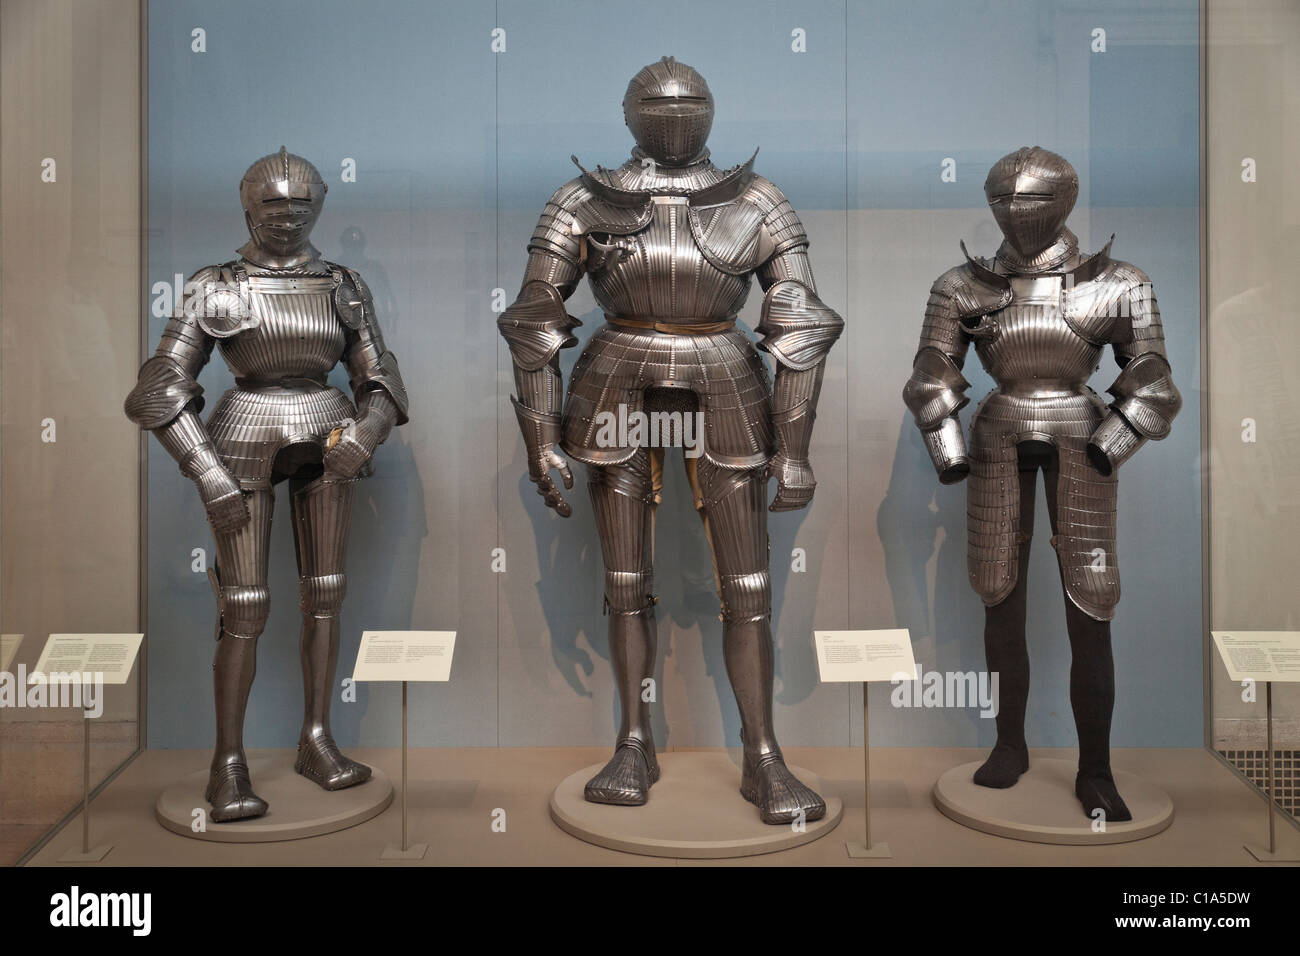 Medieval armor on display at Metropolitan Museum of Art in New York City. Stock Photo